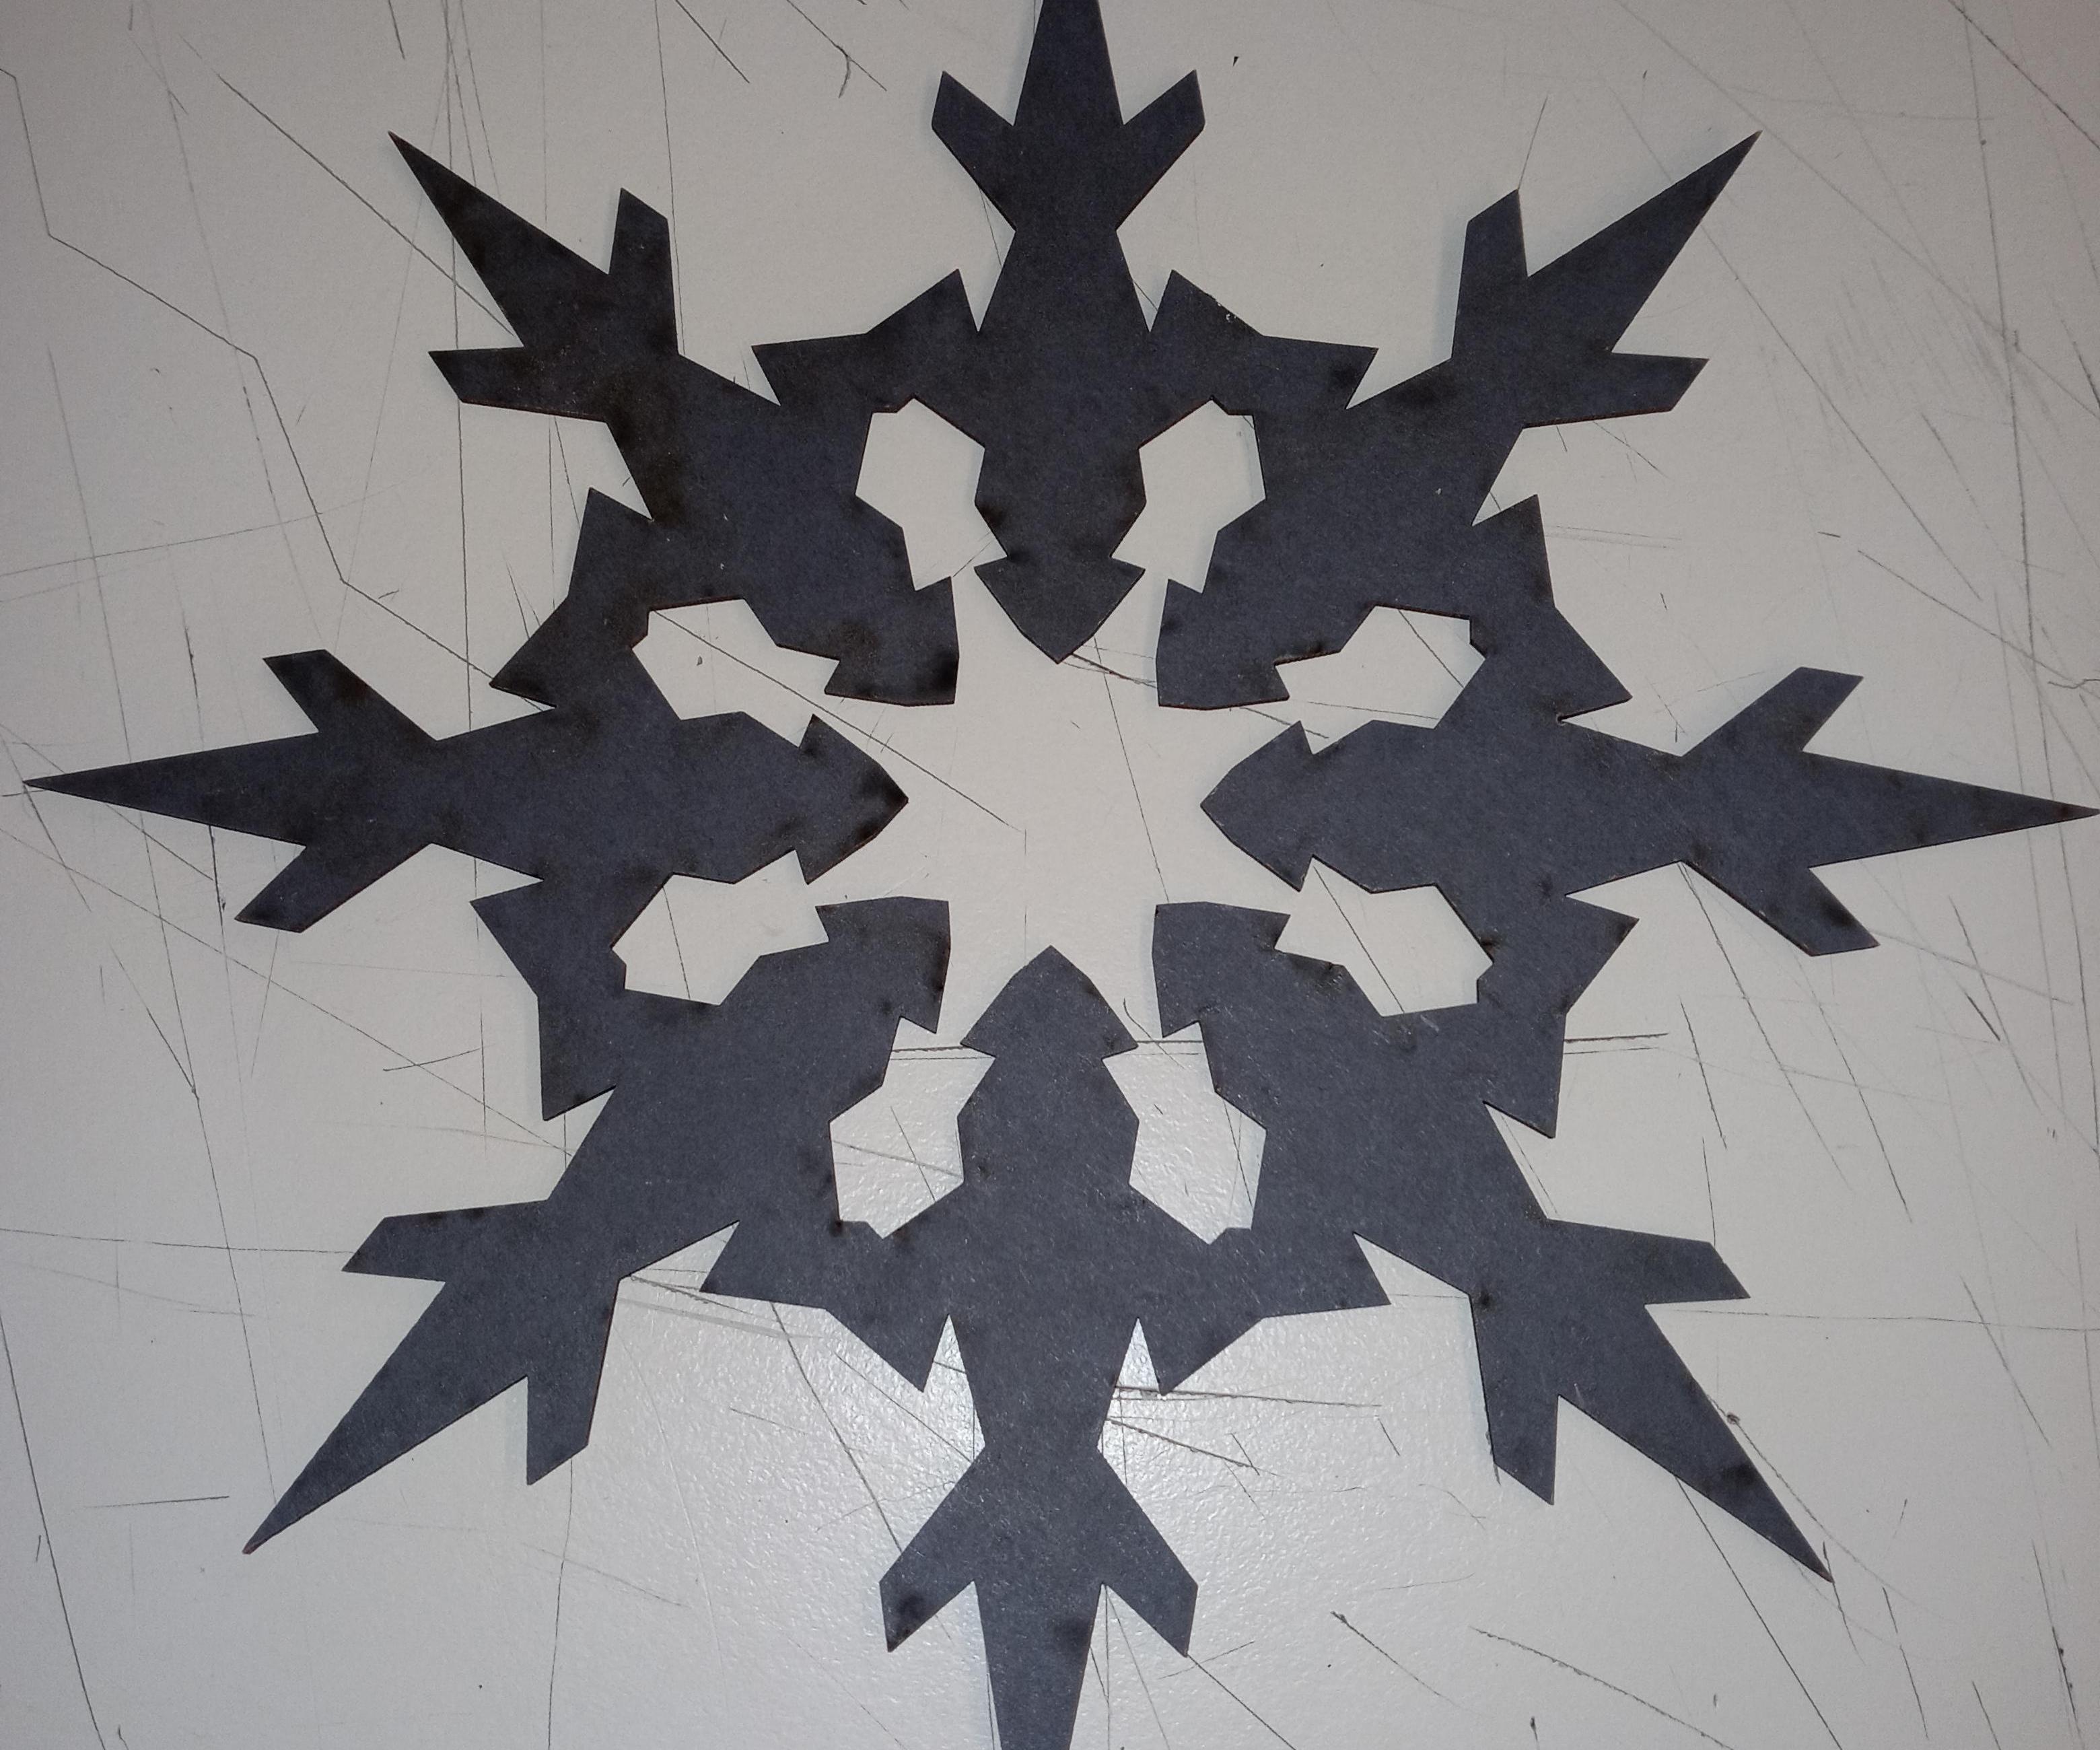 Creating a Snowflake in Onshape